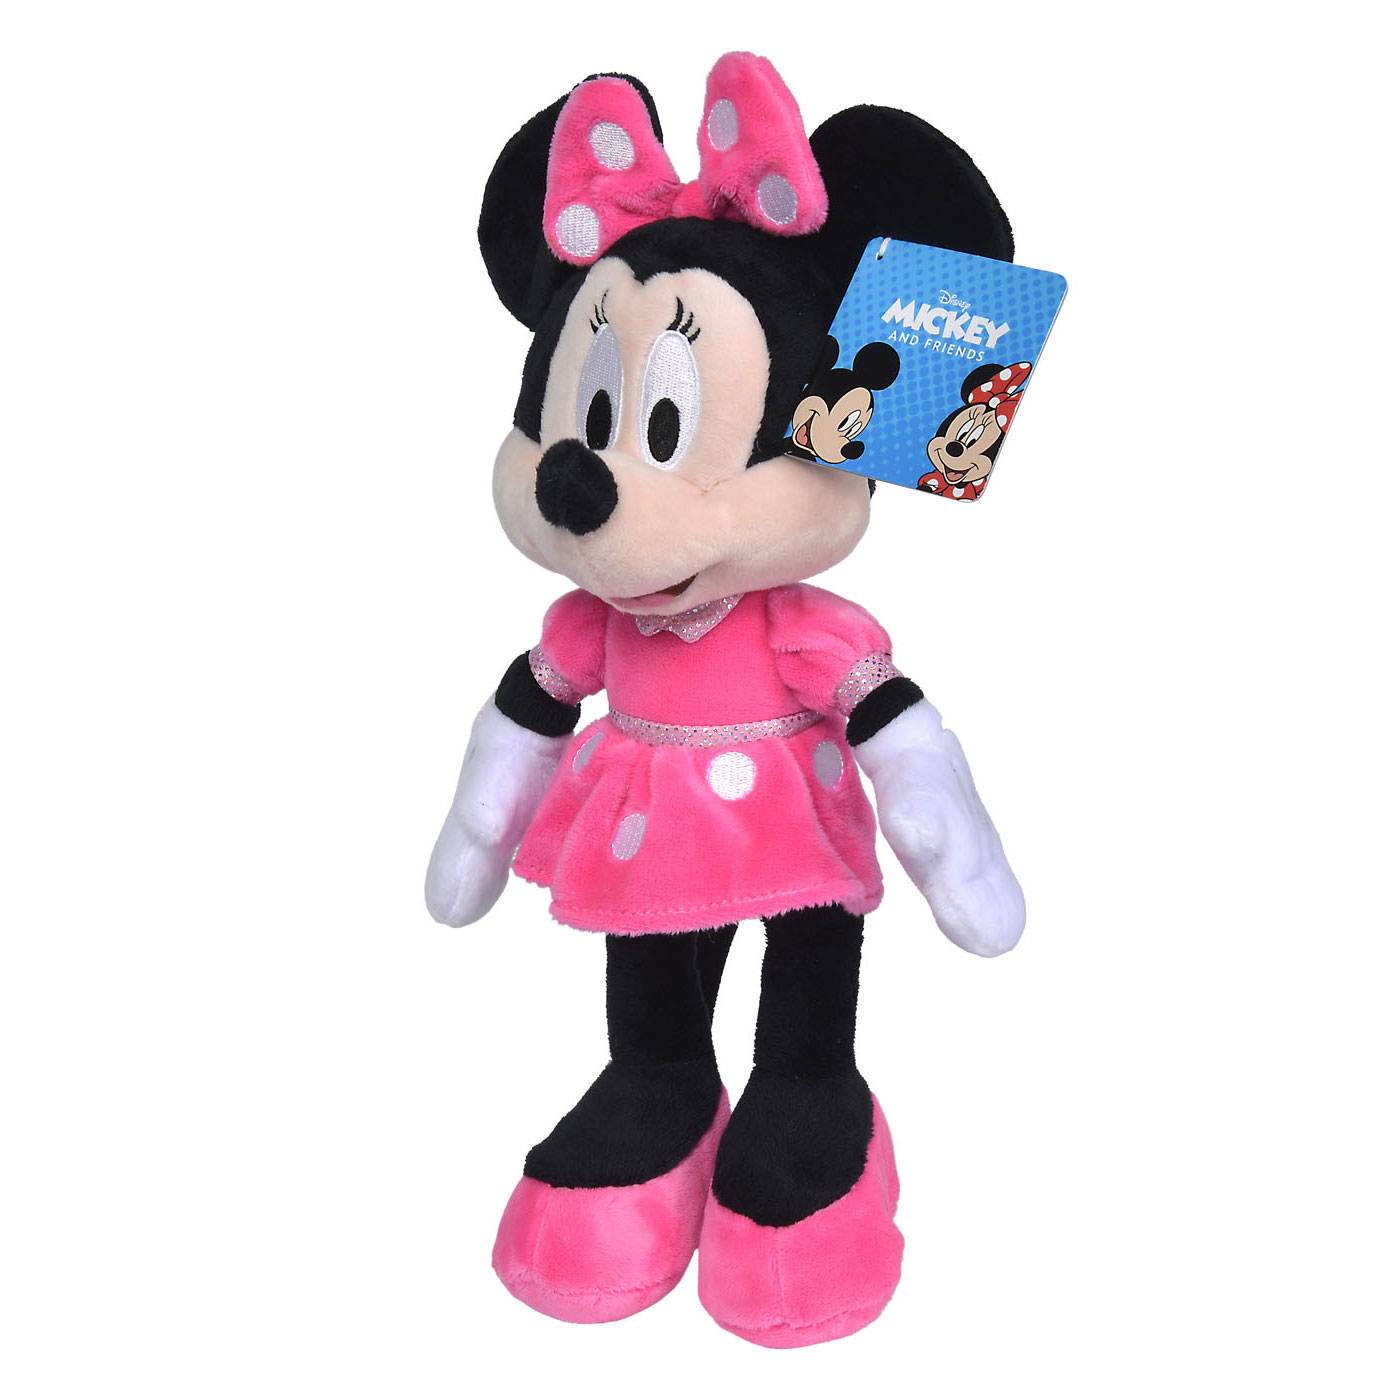 Wetland Winkelcentrum De databank Disney Minnie Mouse Knuffel Pluche, 25cm | Thimble Toys